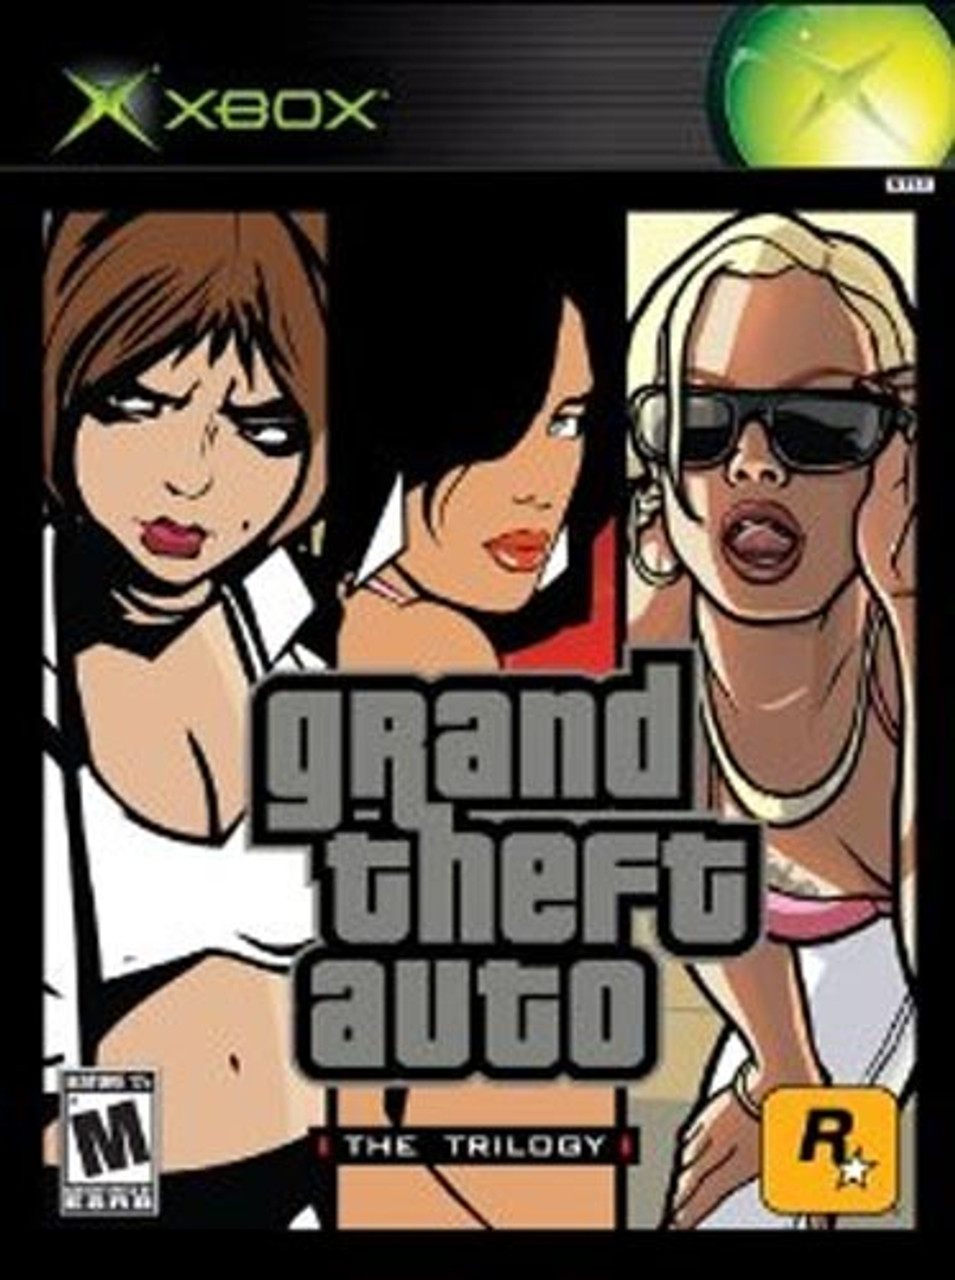 Buy Grand Theft Auto III – The Definitive Edition - Microsoft Store en-SA